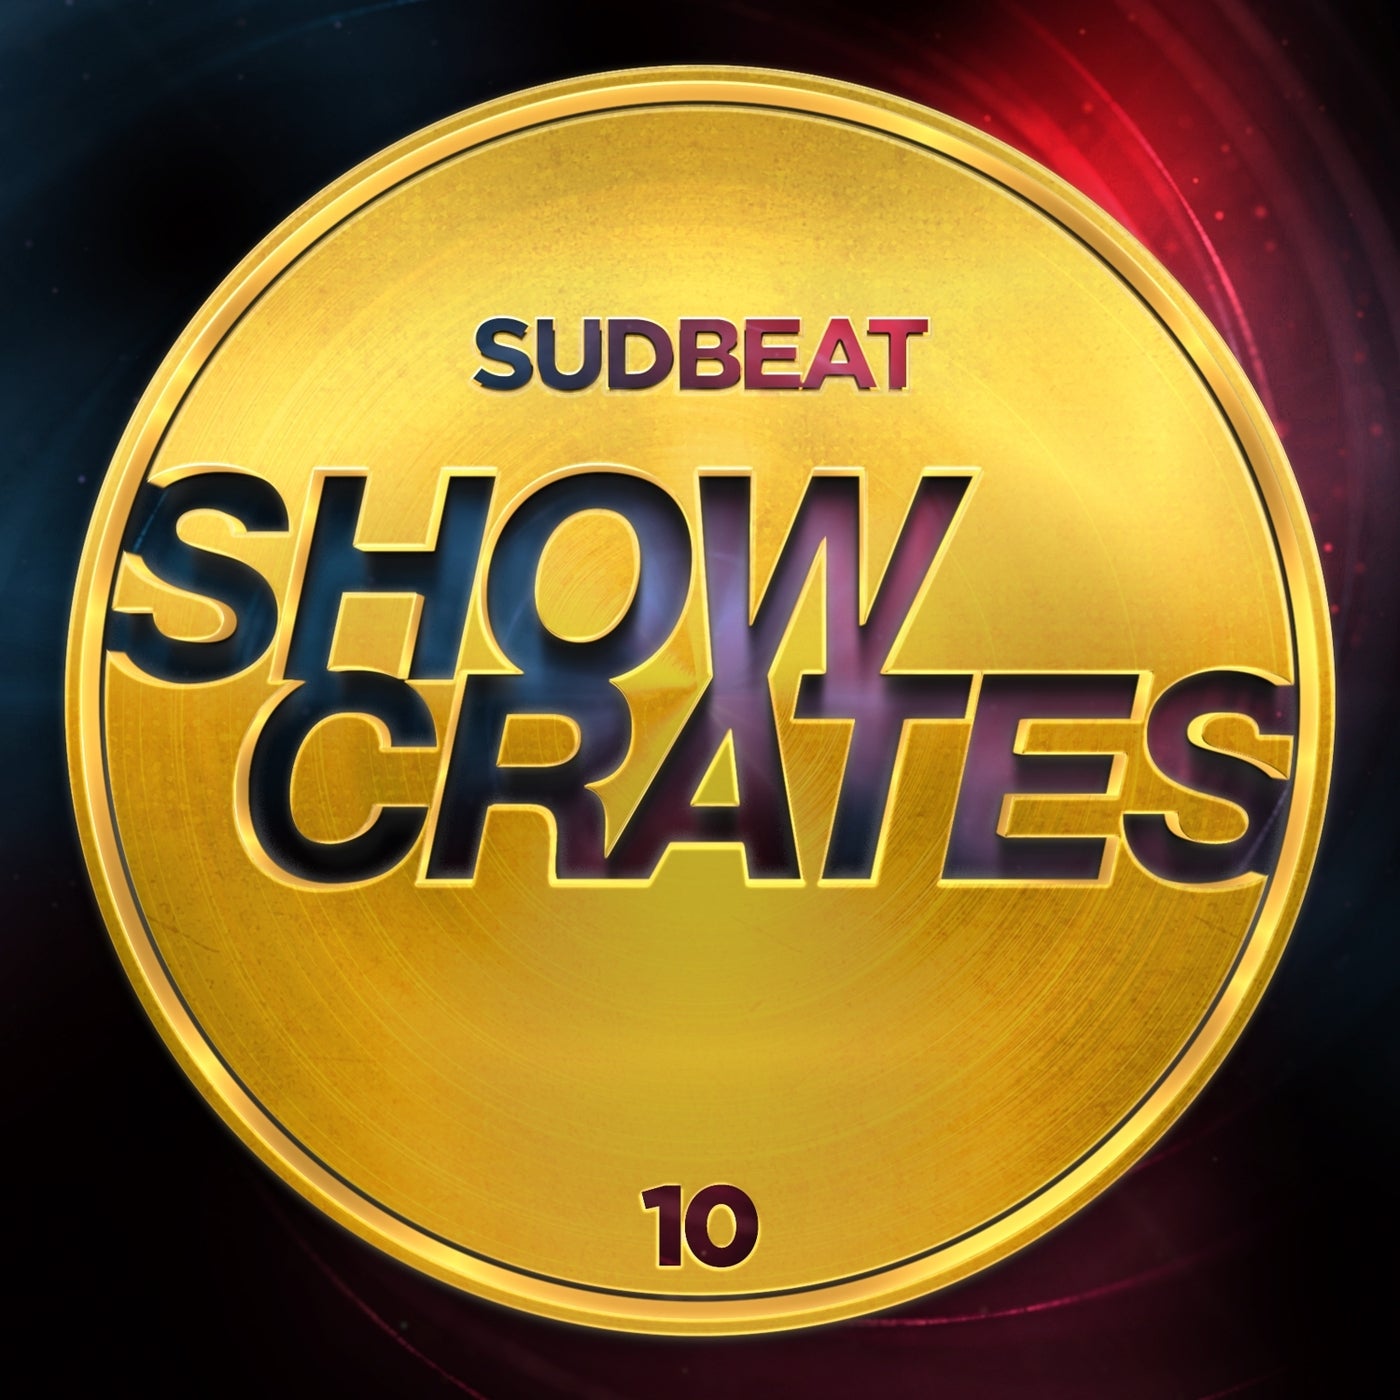 image cover: VA - Sudbeat Showcrates 10 / SBVA010